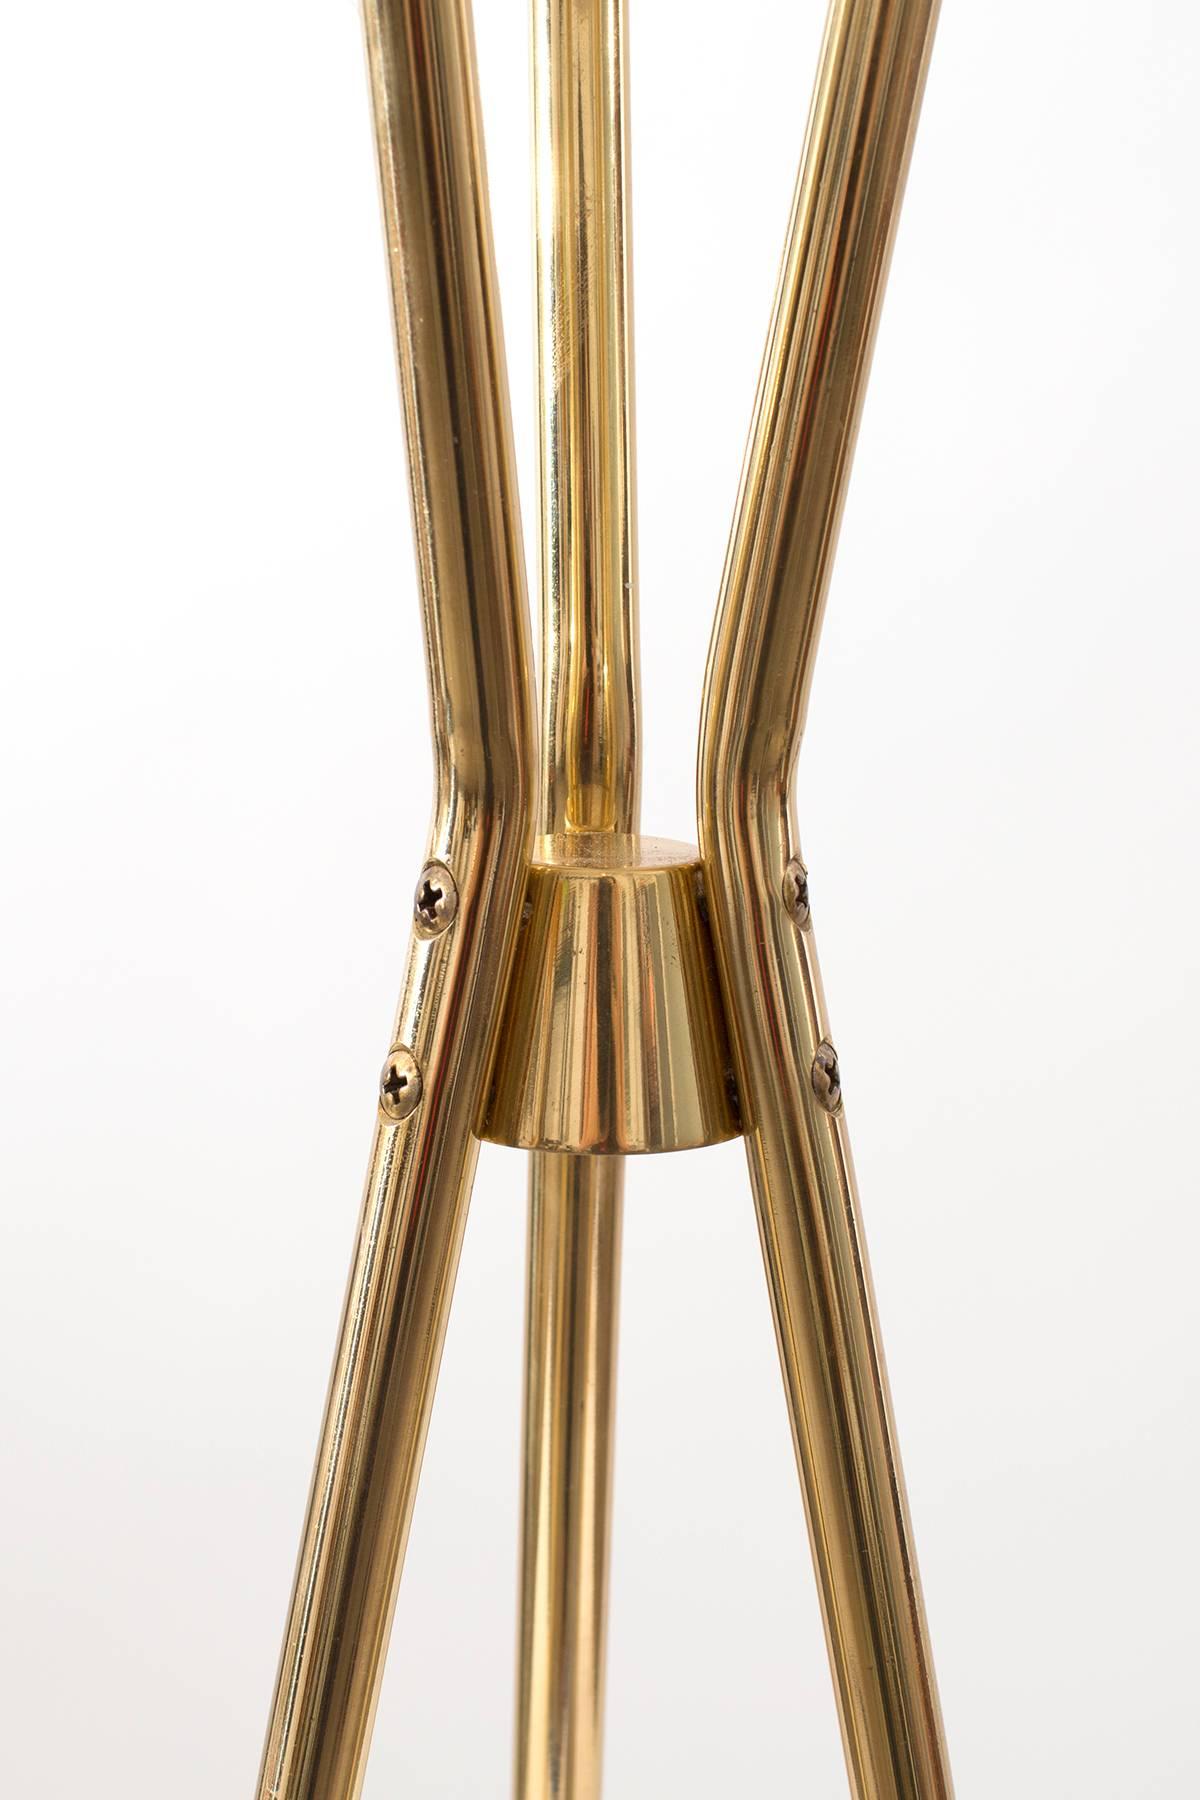 American Gerald Thurston Lightolier Brass and Walnut Floor Lamp